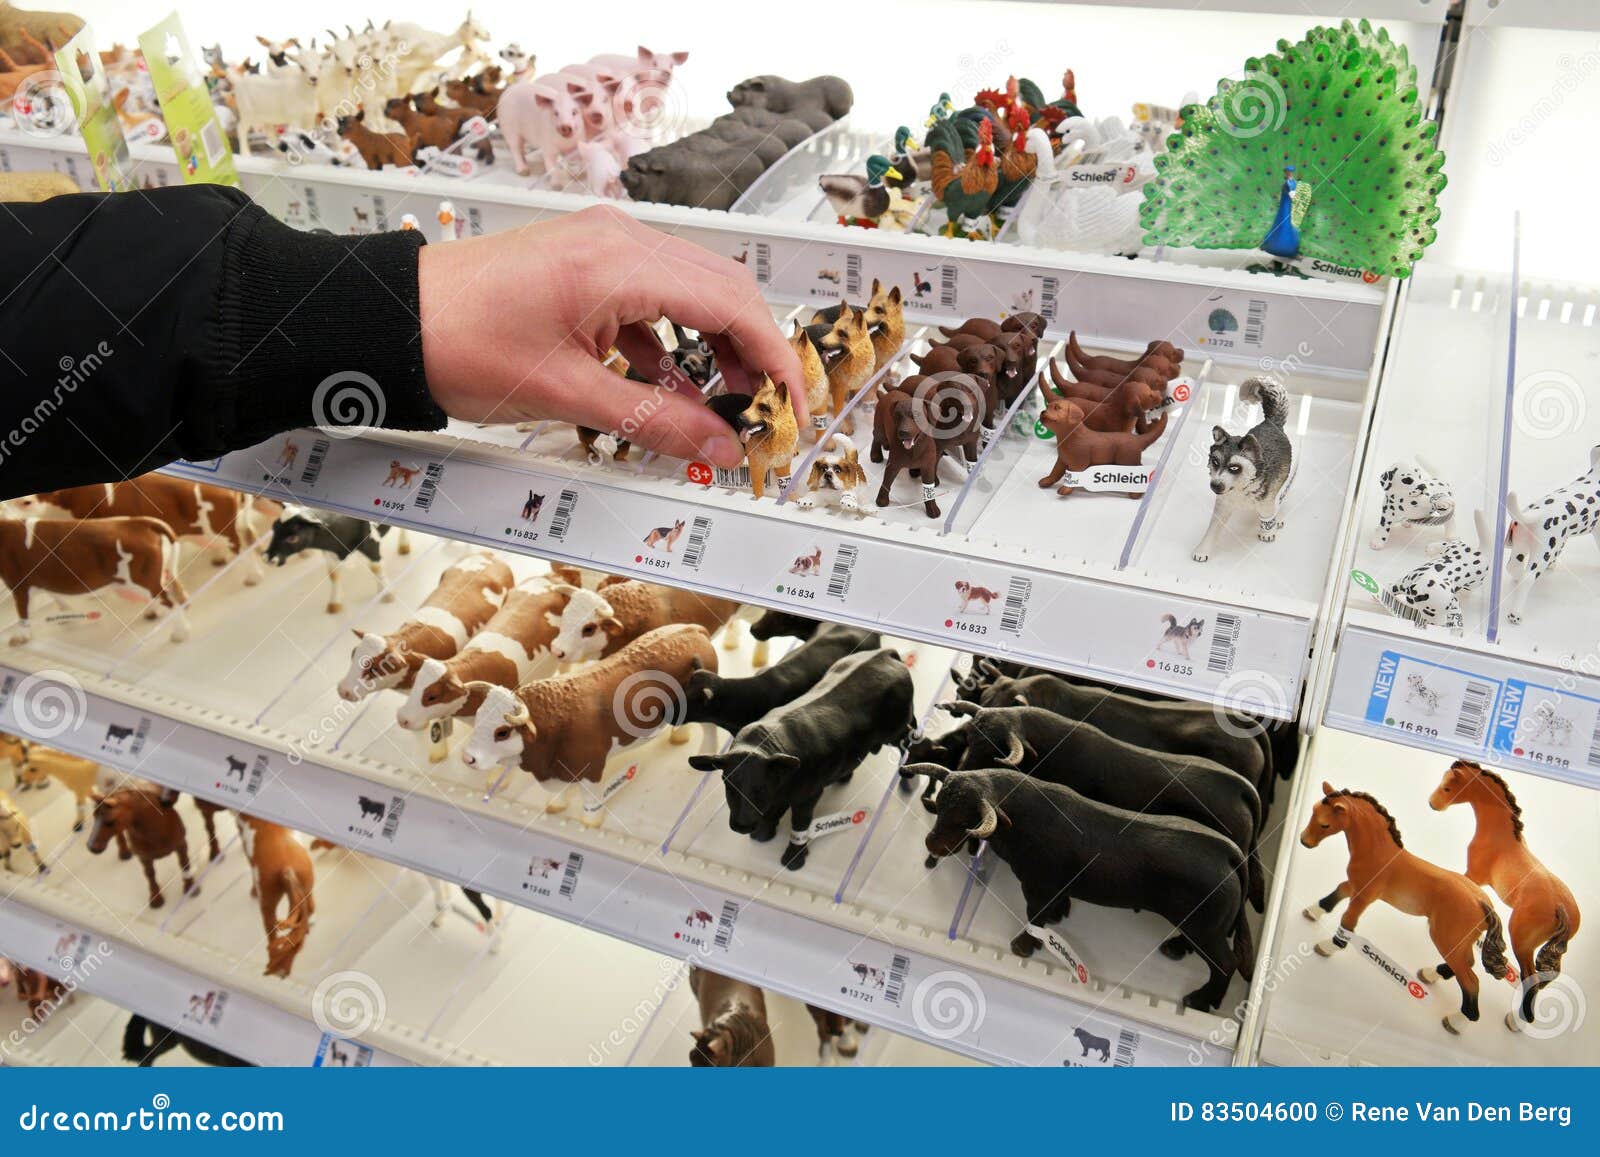 Schleich Animals Toys Editorial Image Image Of European